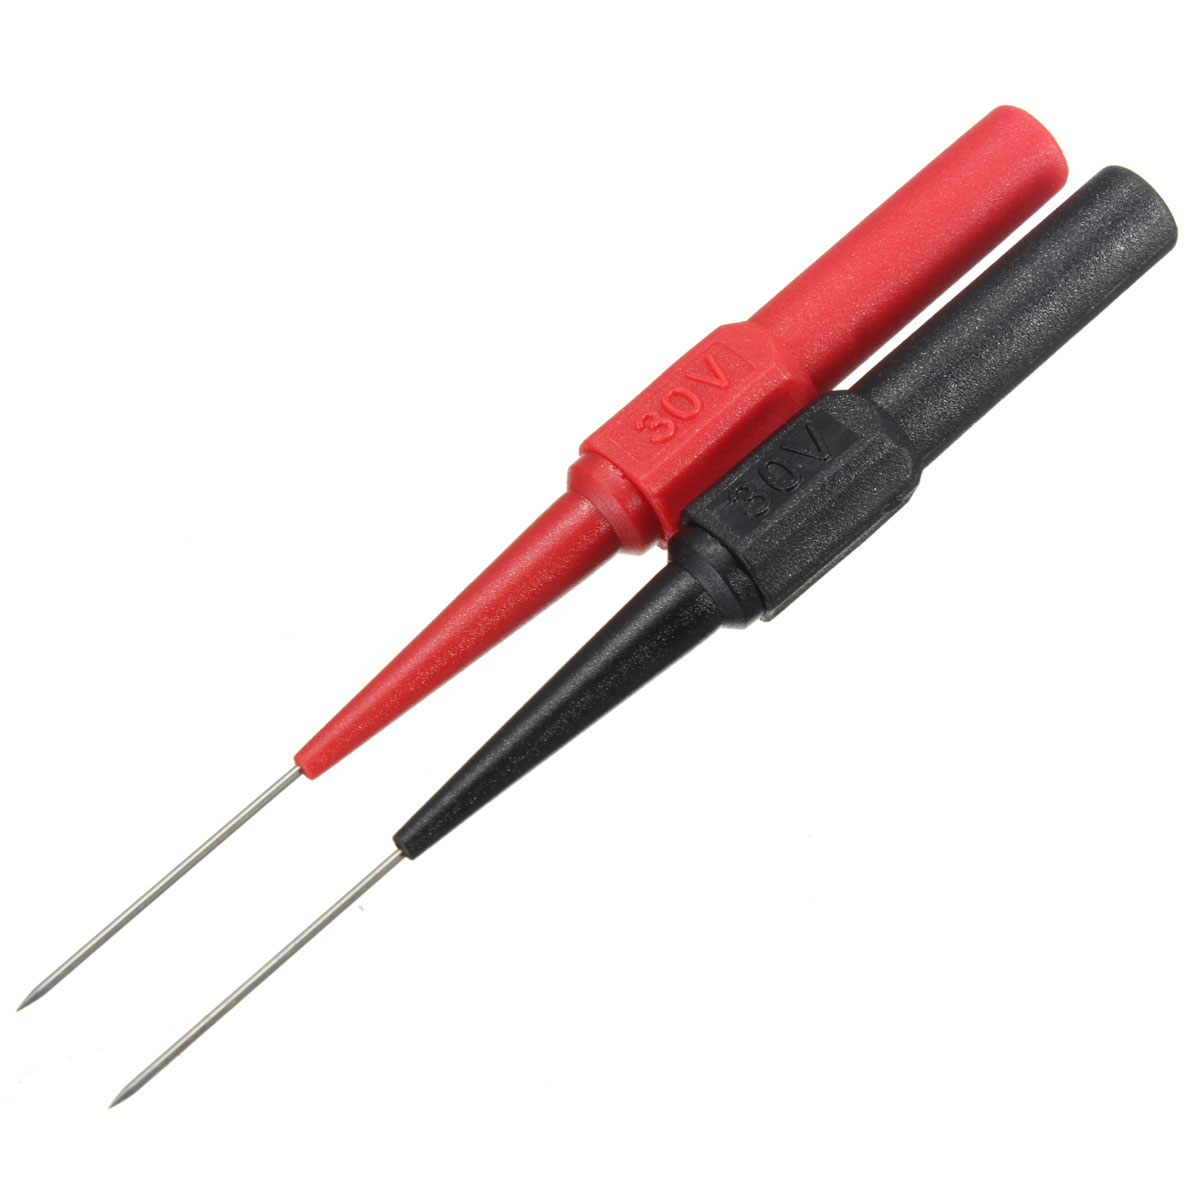 5pcs-DANIU-Insulation-Piercing-Needle-Non-destructive-Multimeter-Test-Probe-RedBlack-1402569-2